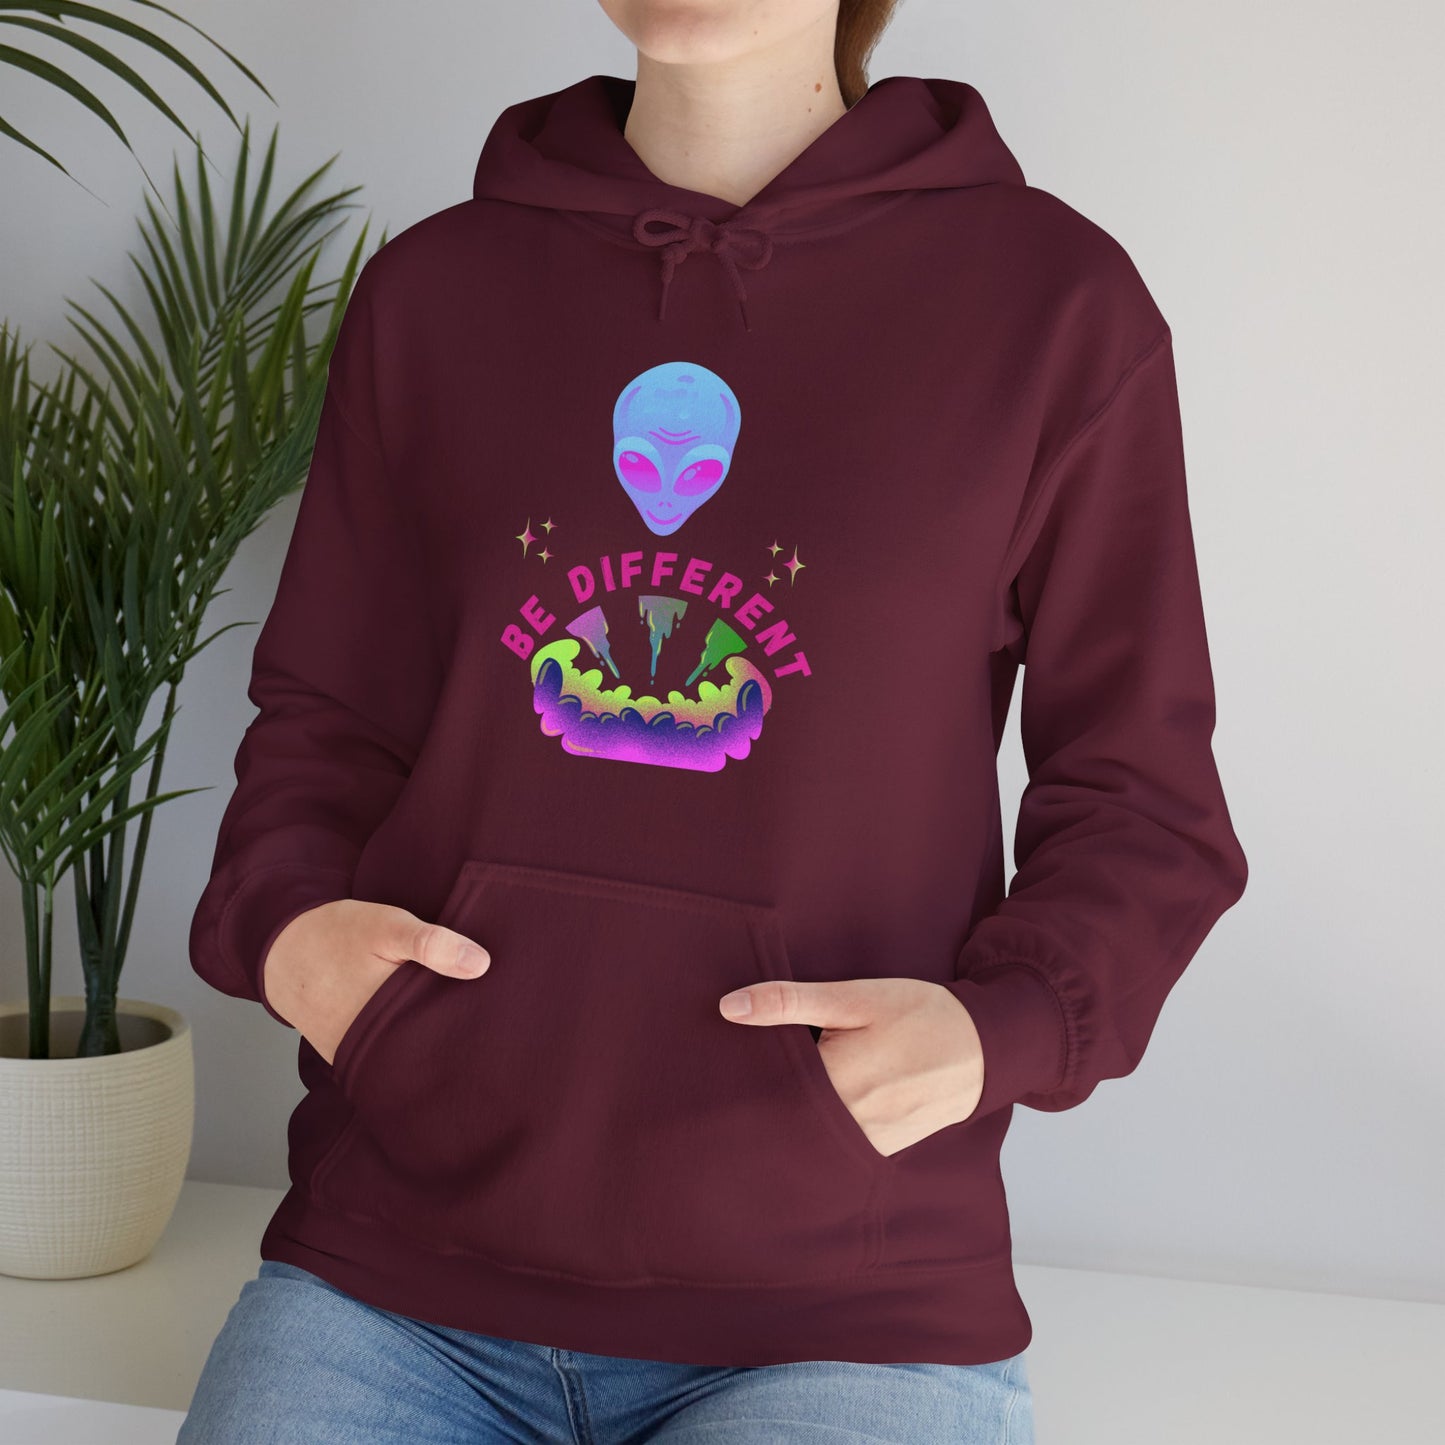 BE DIFFERENT - Unisex Hooded Sweatshirt